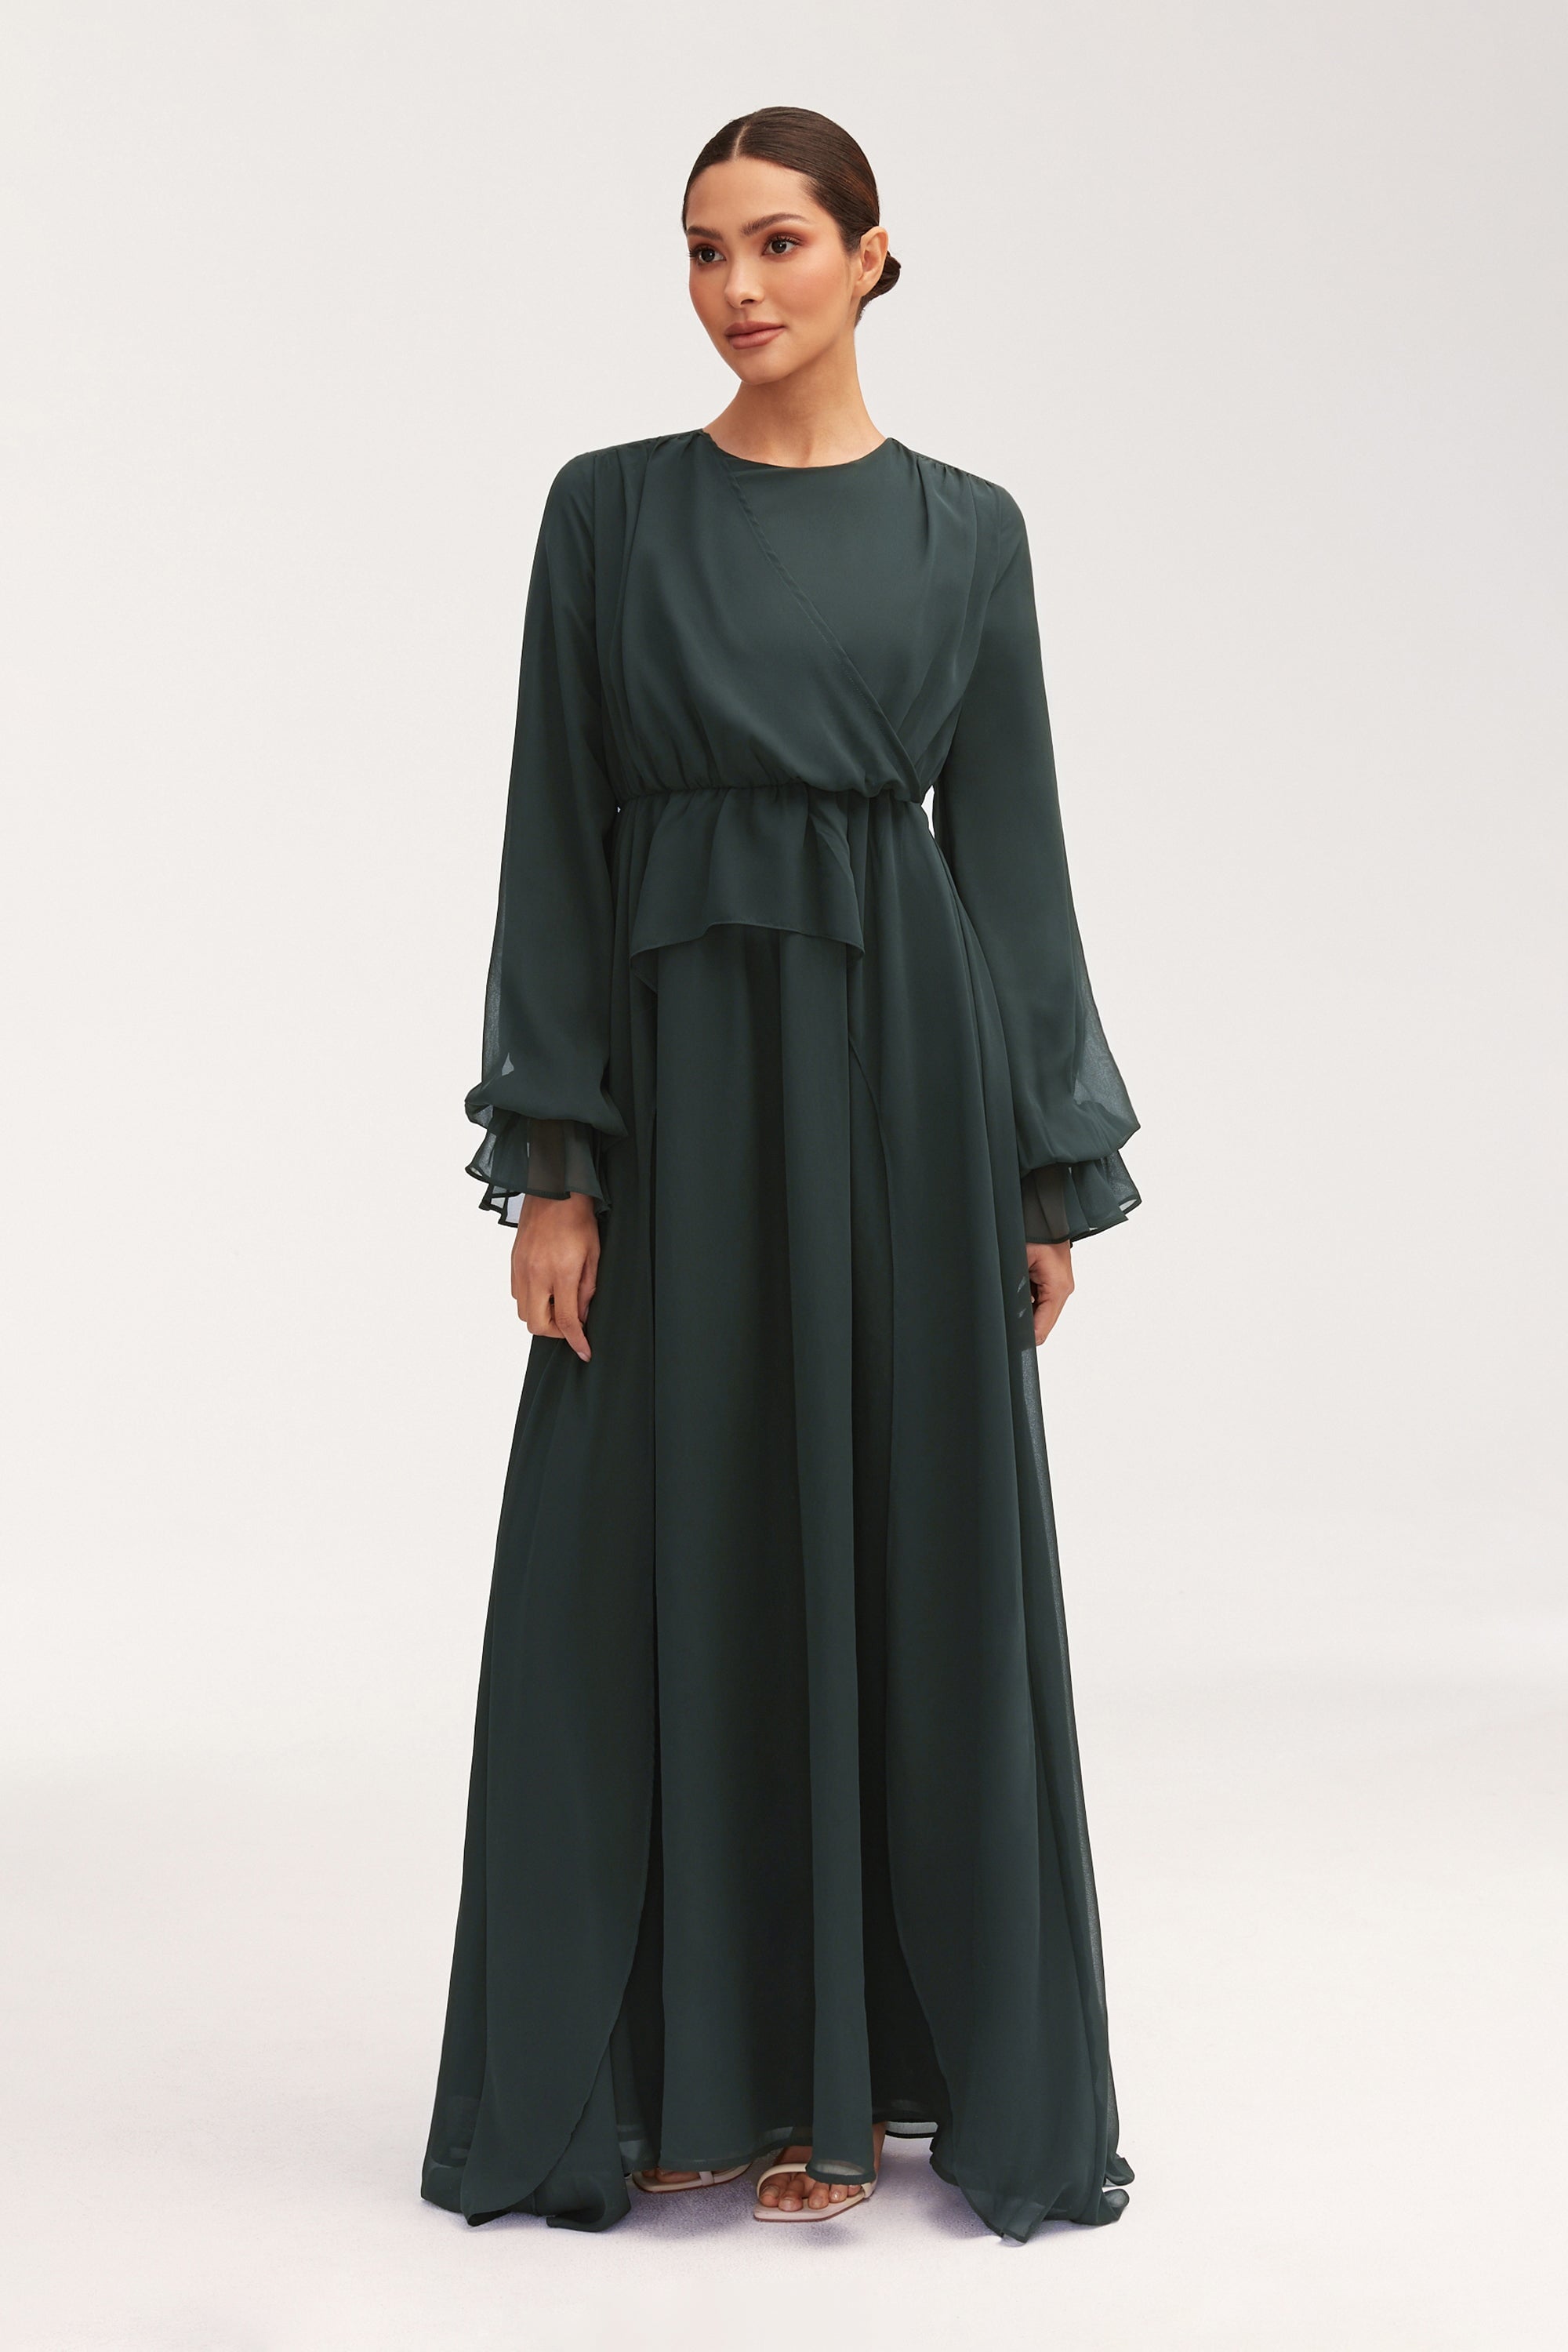 Aara Chiffon Maxi Dress - Emerald Clothing Veiled 